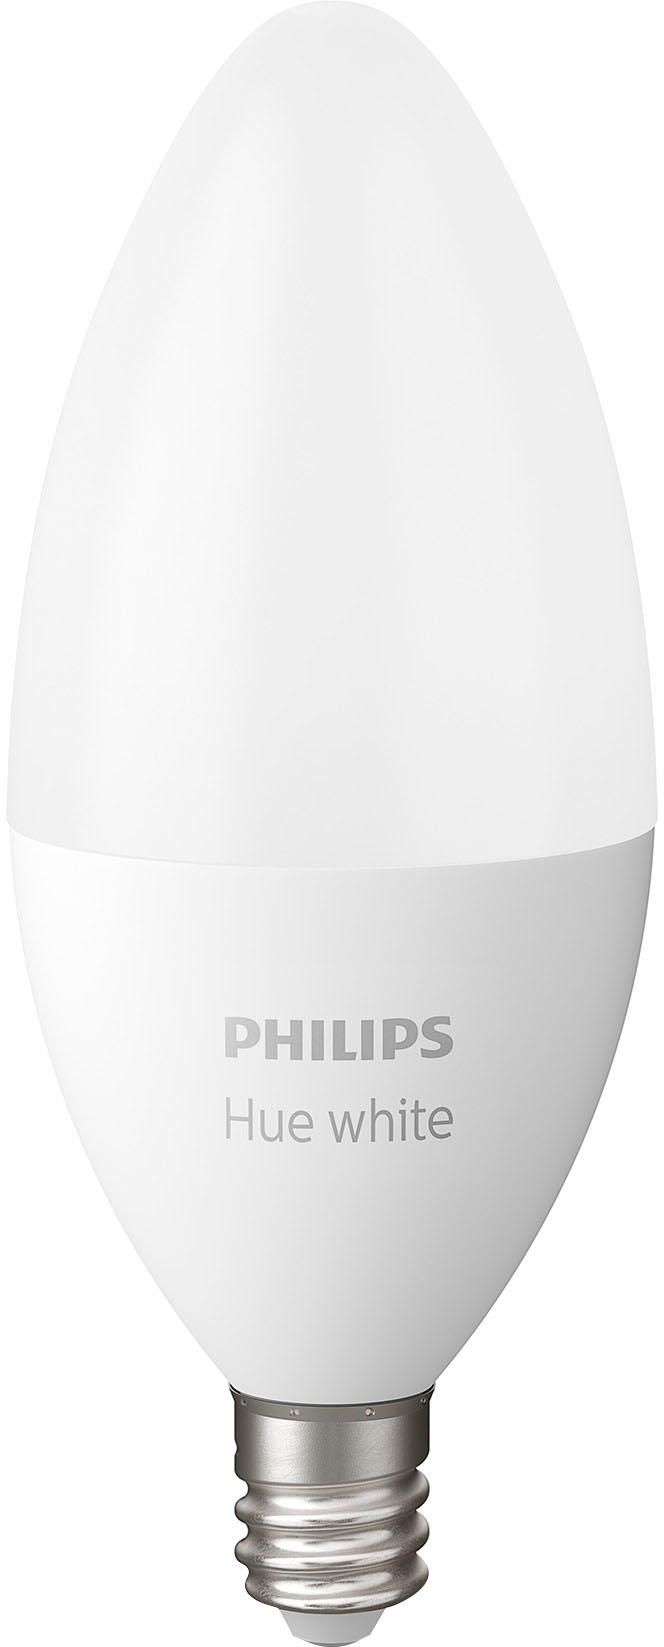 Philips Hue White and Color E12 Light Bulb